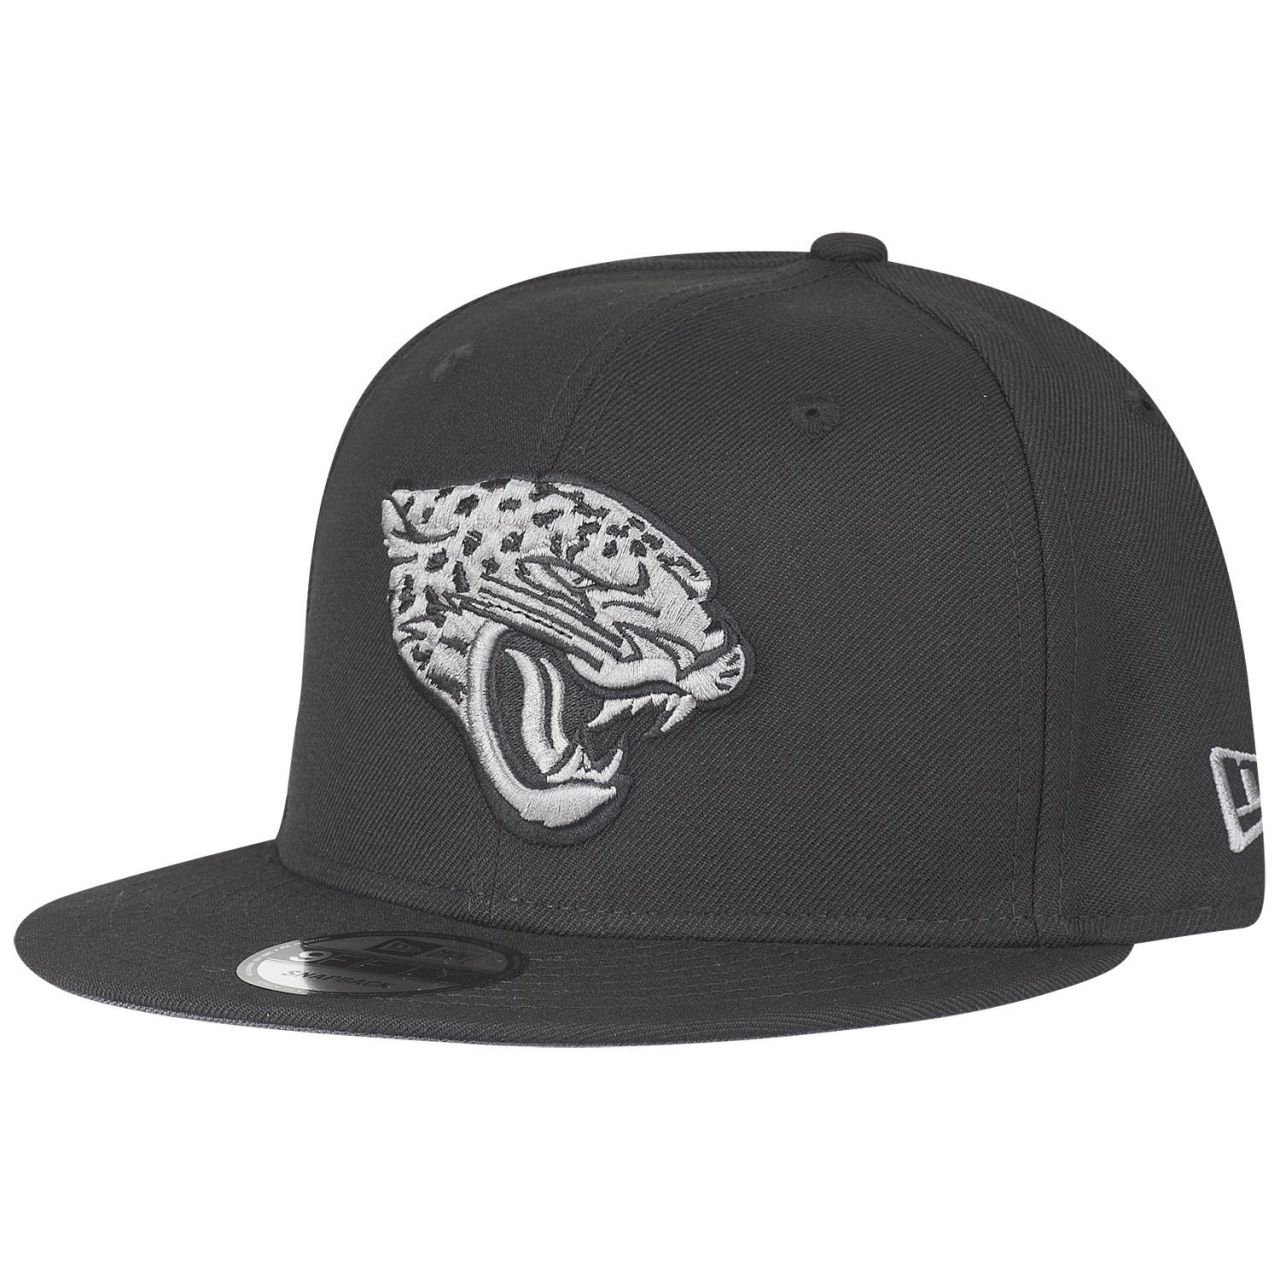 amfoo - New Era 9Fifty Snapback Cap - Jacksonville Jaguars schwarz